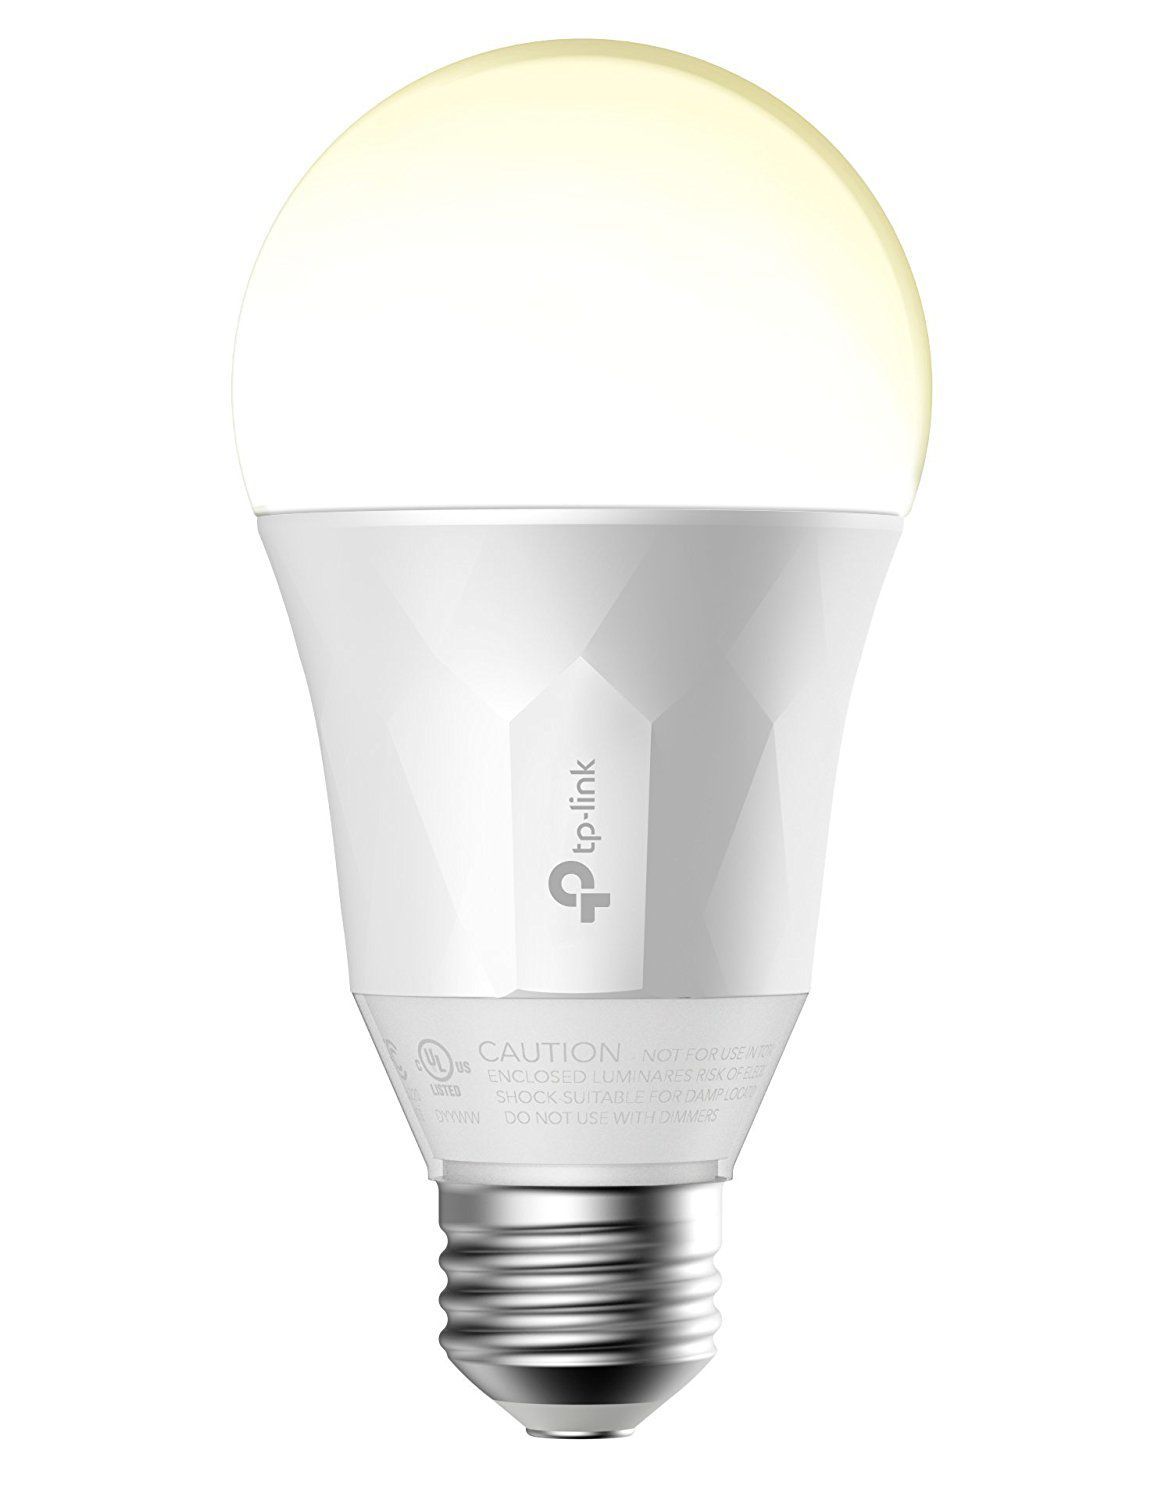 1 Pack Smart LED Light Bulb Switch Multicolored Lights Bulbs The Night Reading Light   